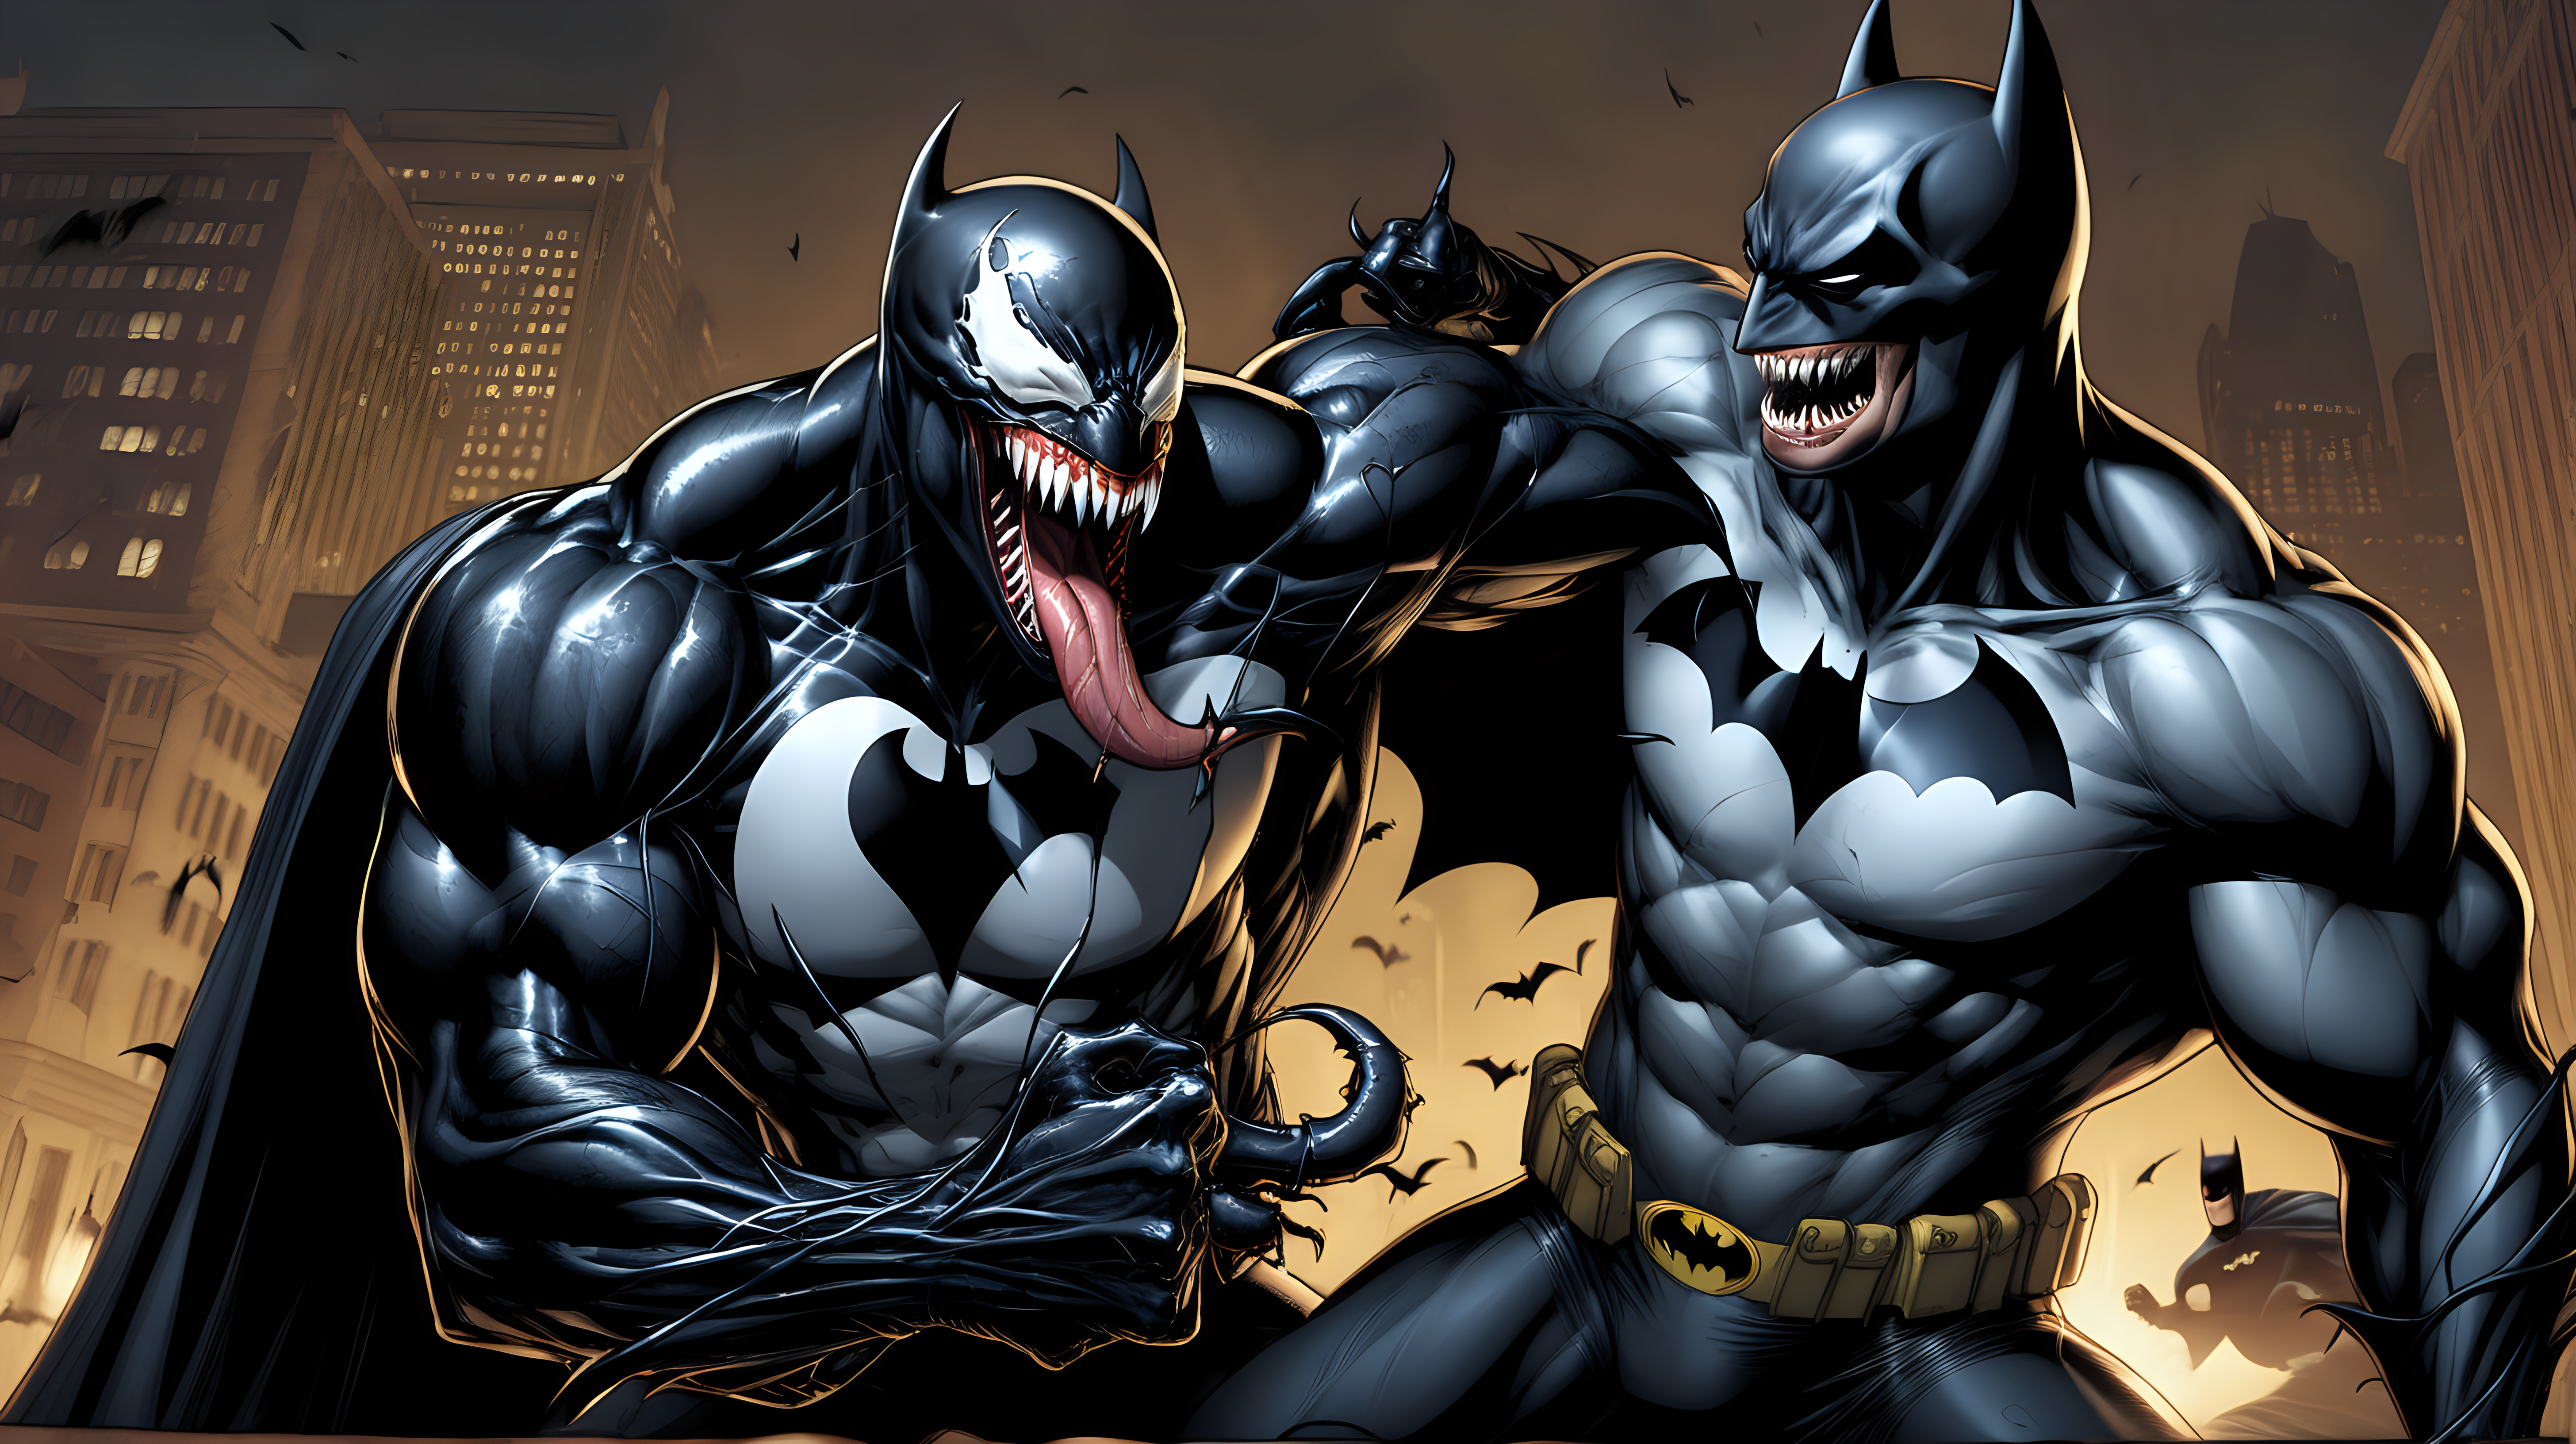 Venom fightsthe Batman